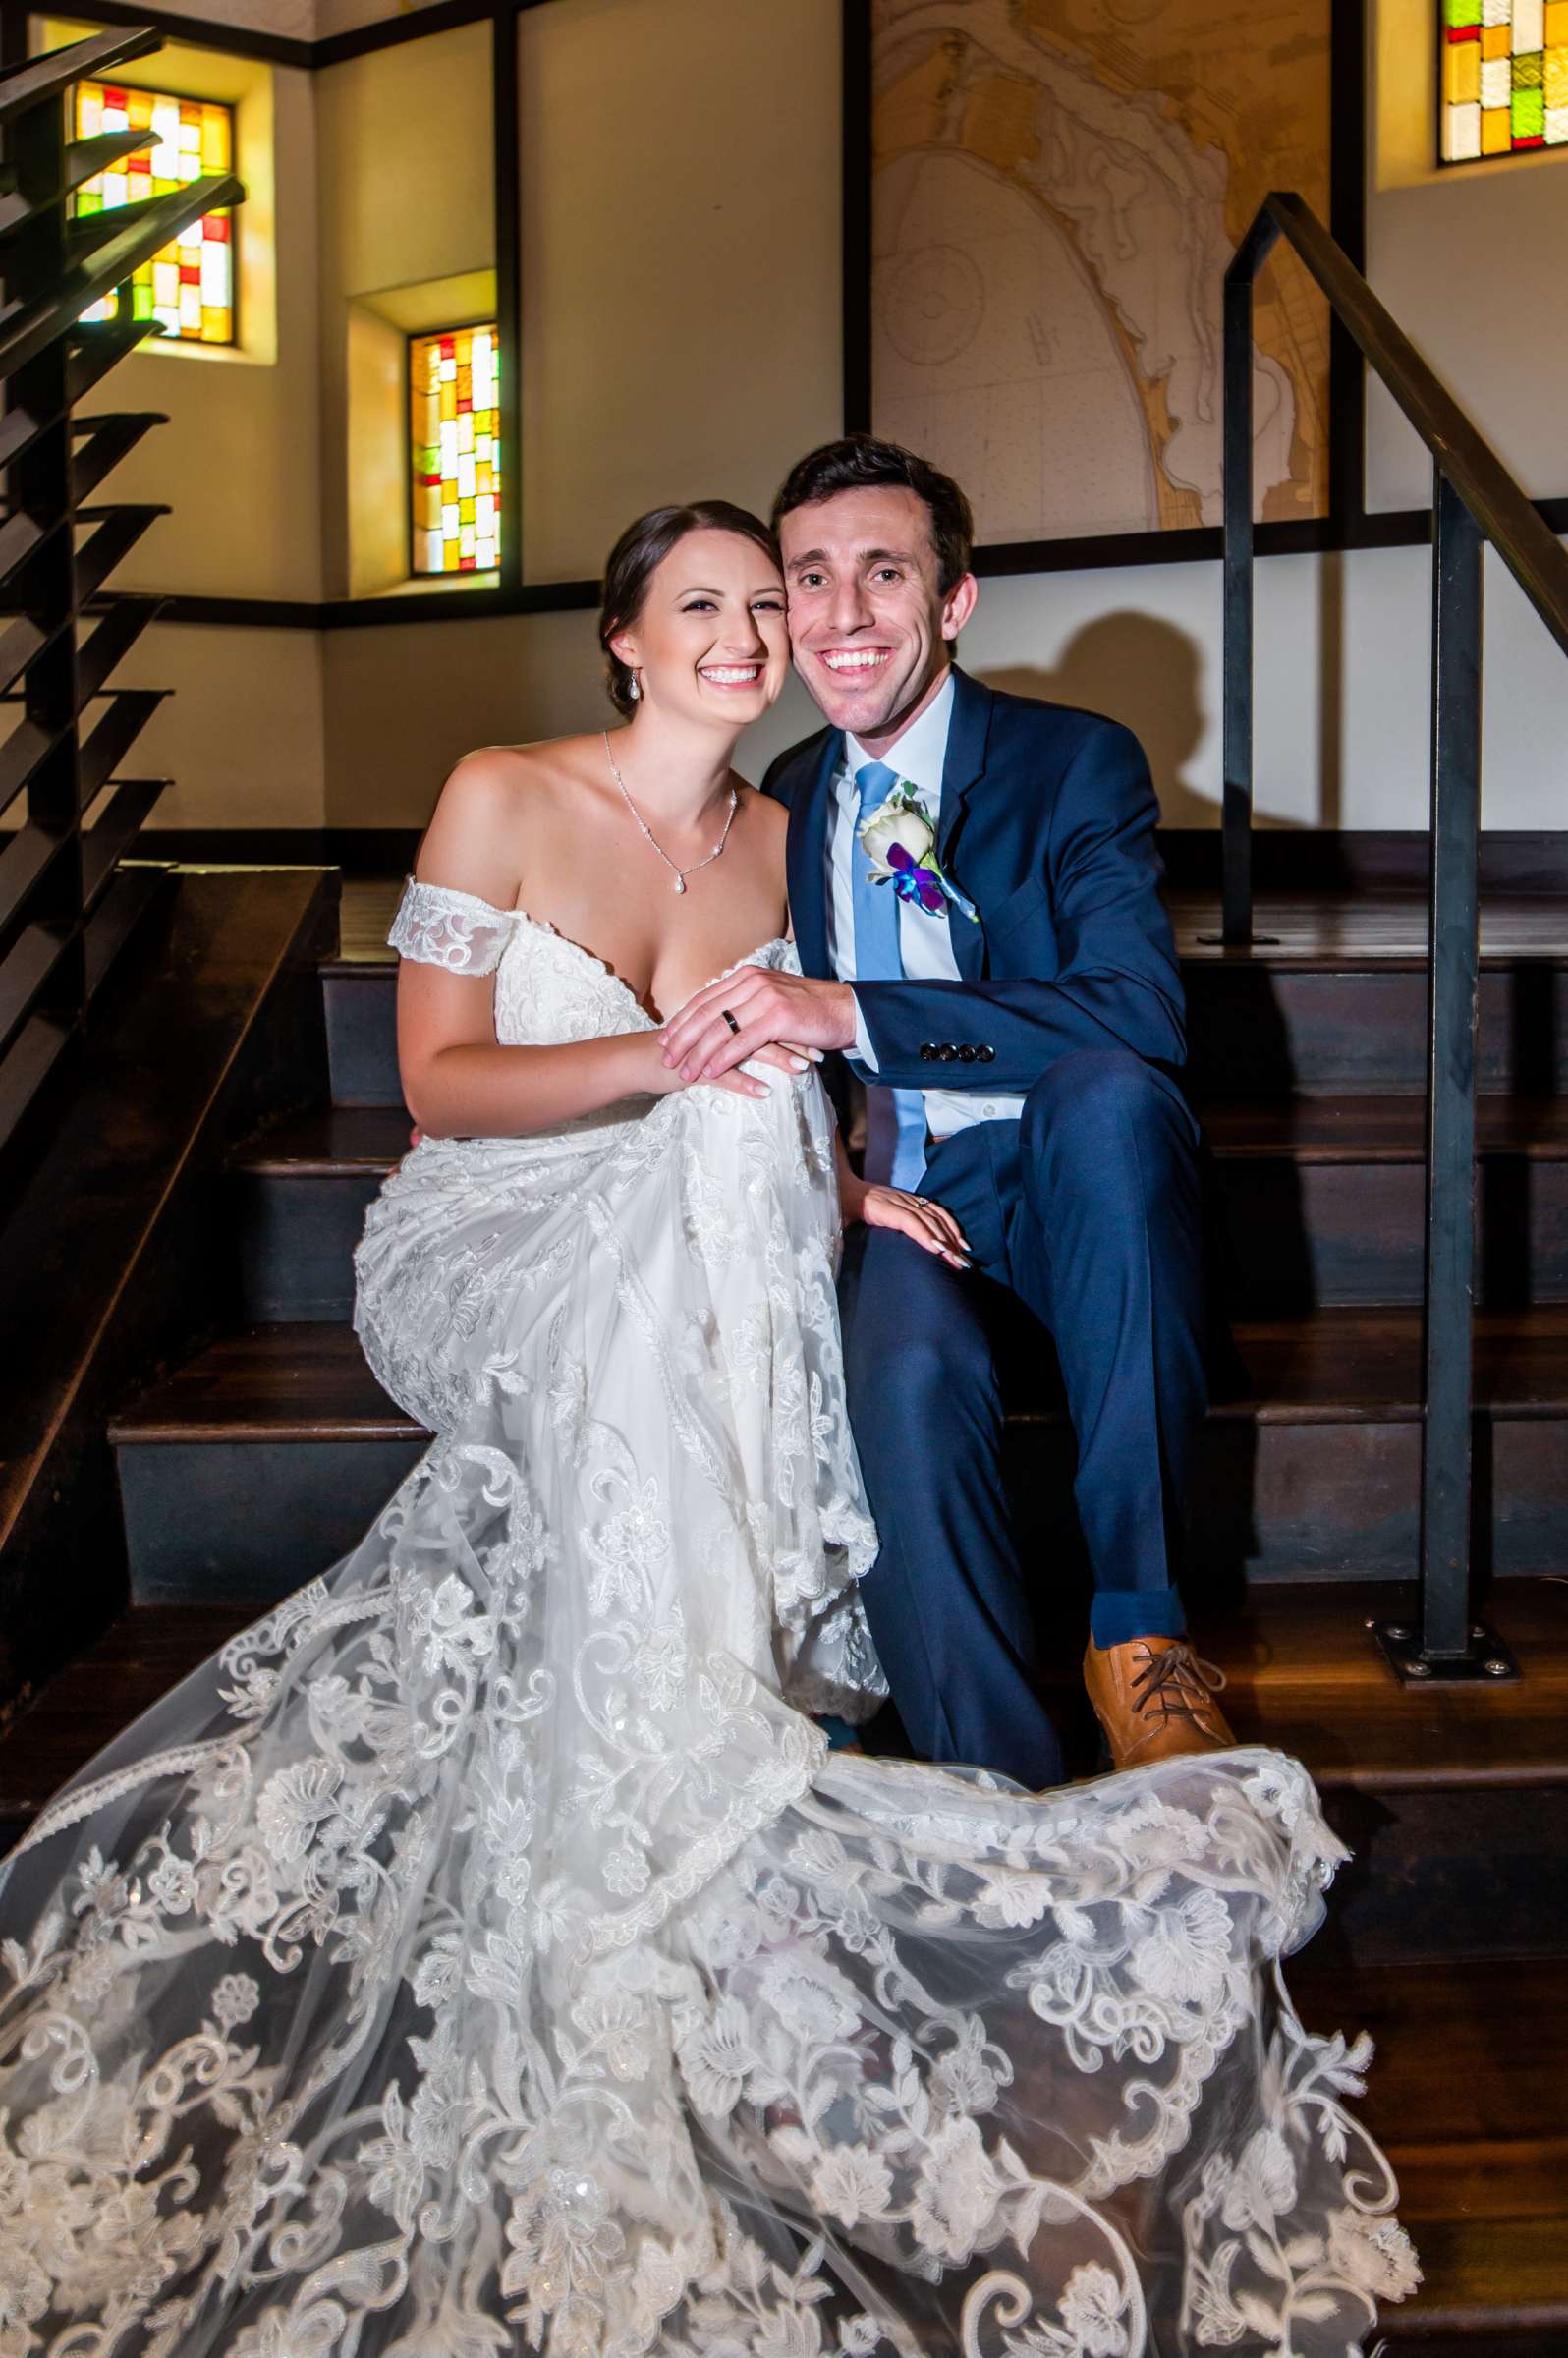 Tom Hams Lighthouse Wedding, Alyssa and Ryan Wedding Photo #2 by True Photography